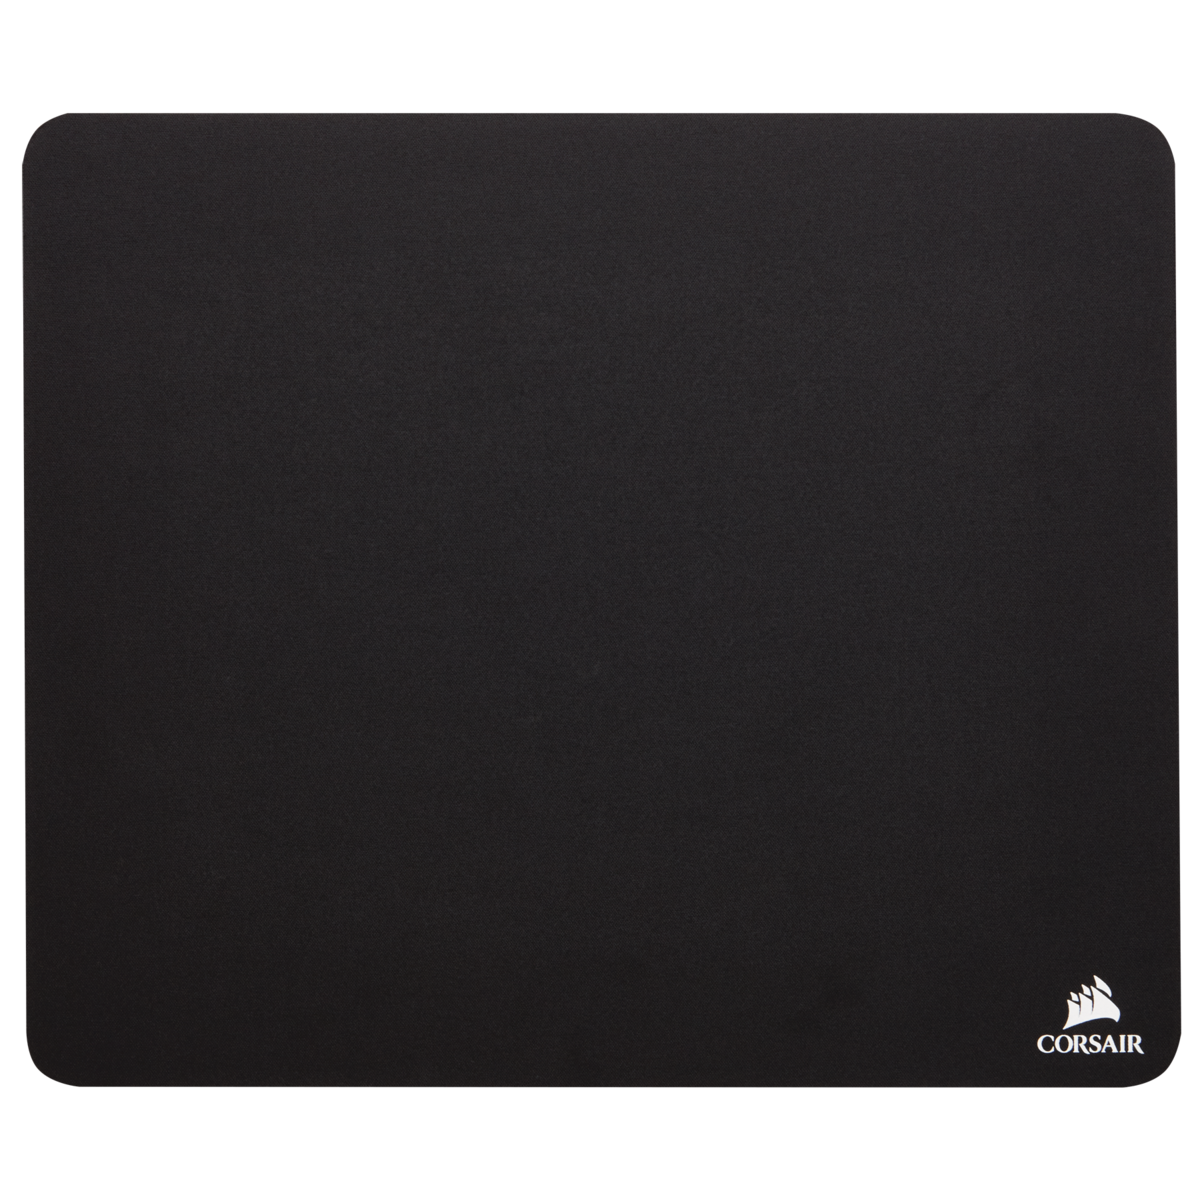 Corsair Gaming™ MM100 Cloth Mouse Pad - Medium 鼠標墊